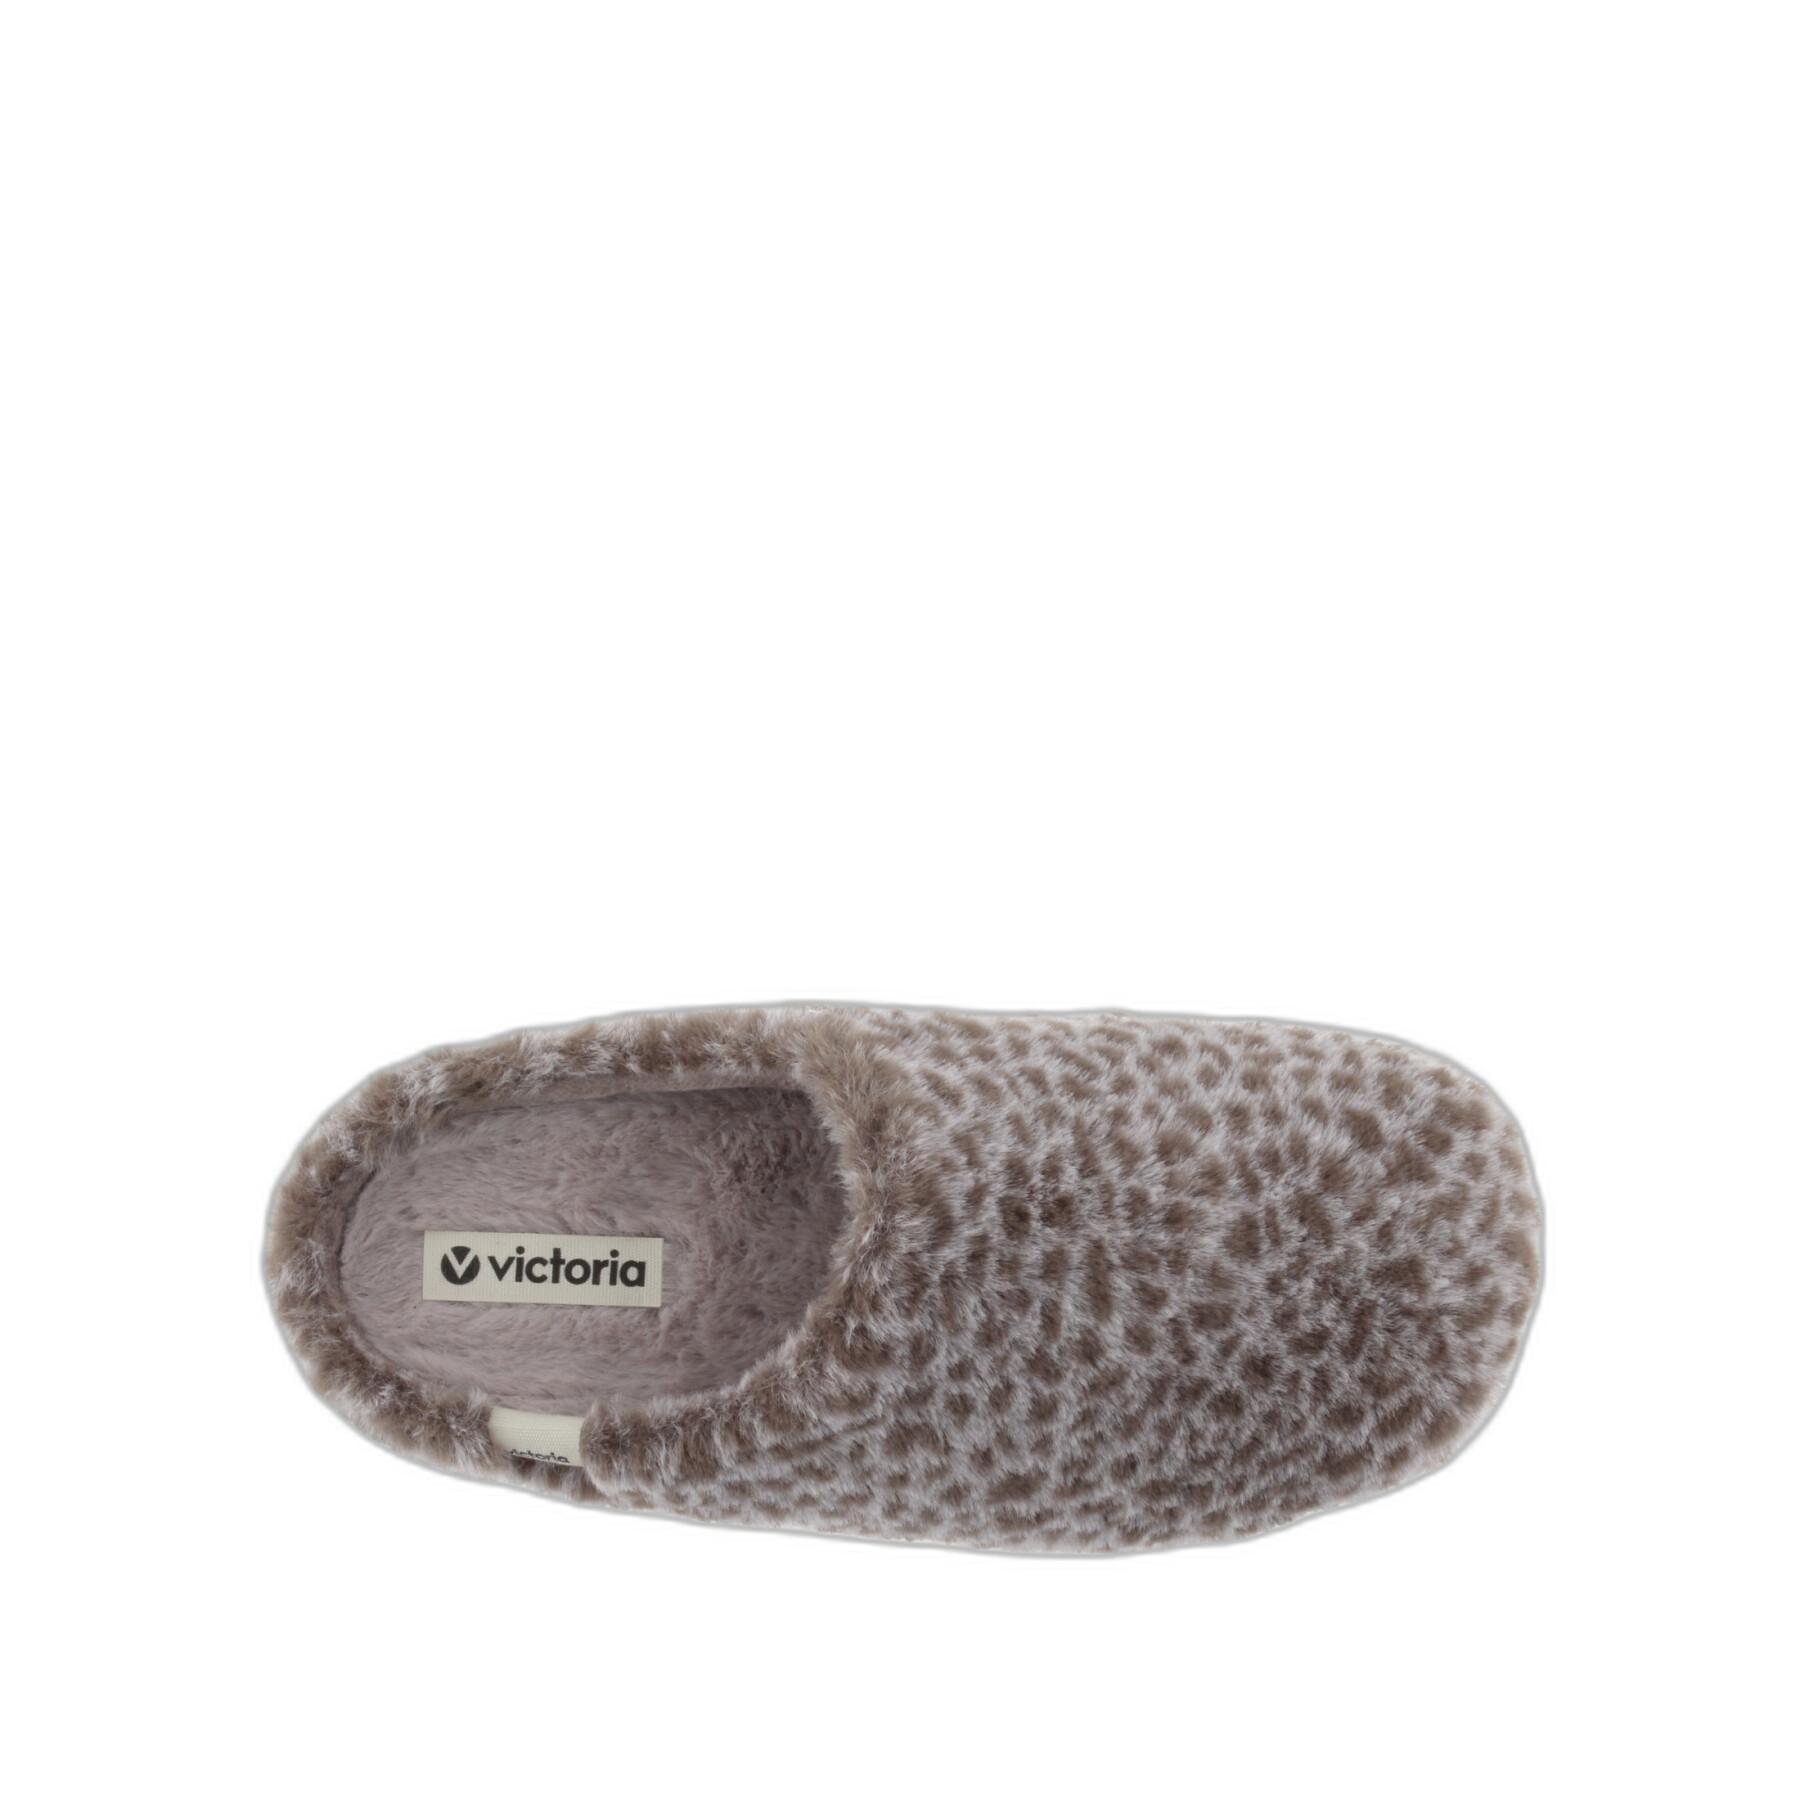 Women's printed slippers Victoria Norte Pelo Animal